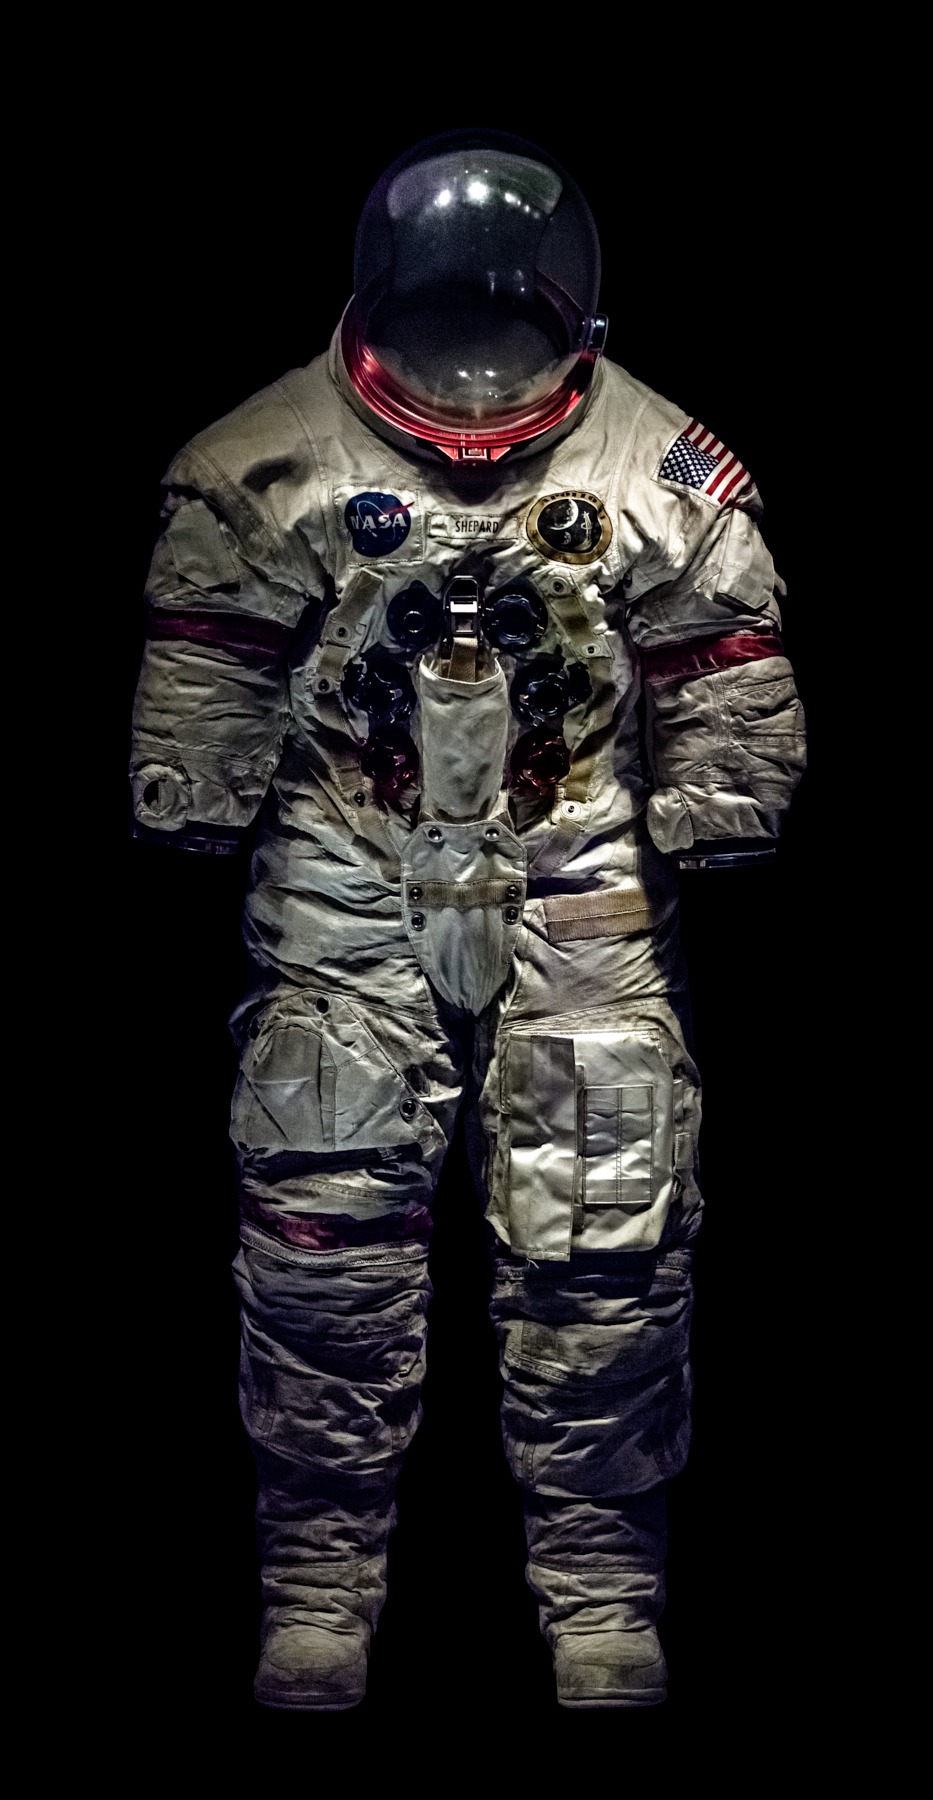 shepard space suit apollo 14 nasa cape canaveral edition 1/1